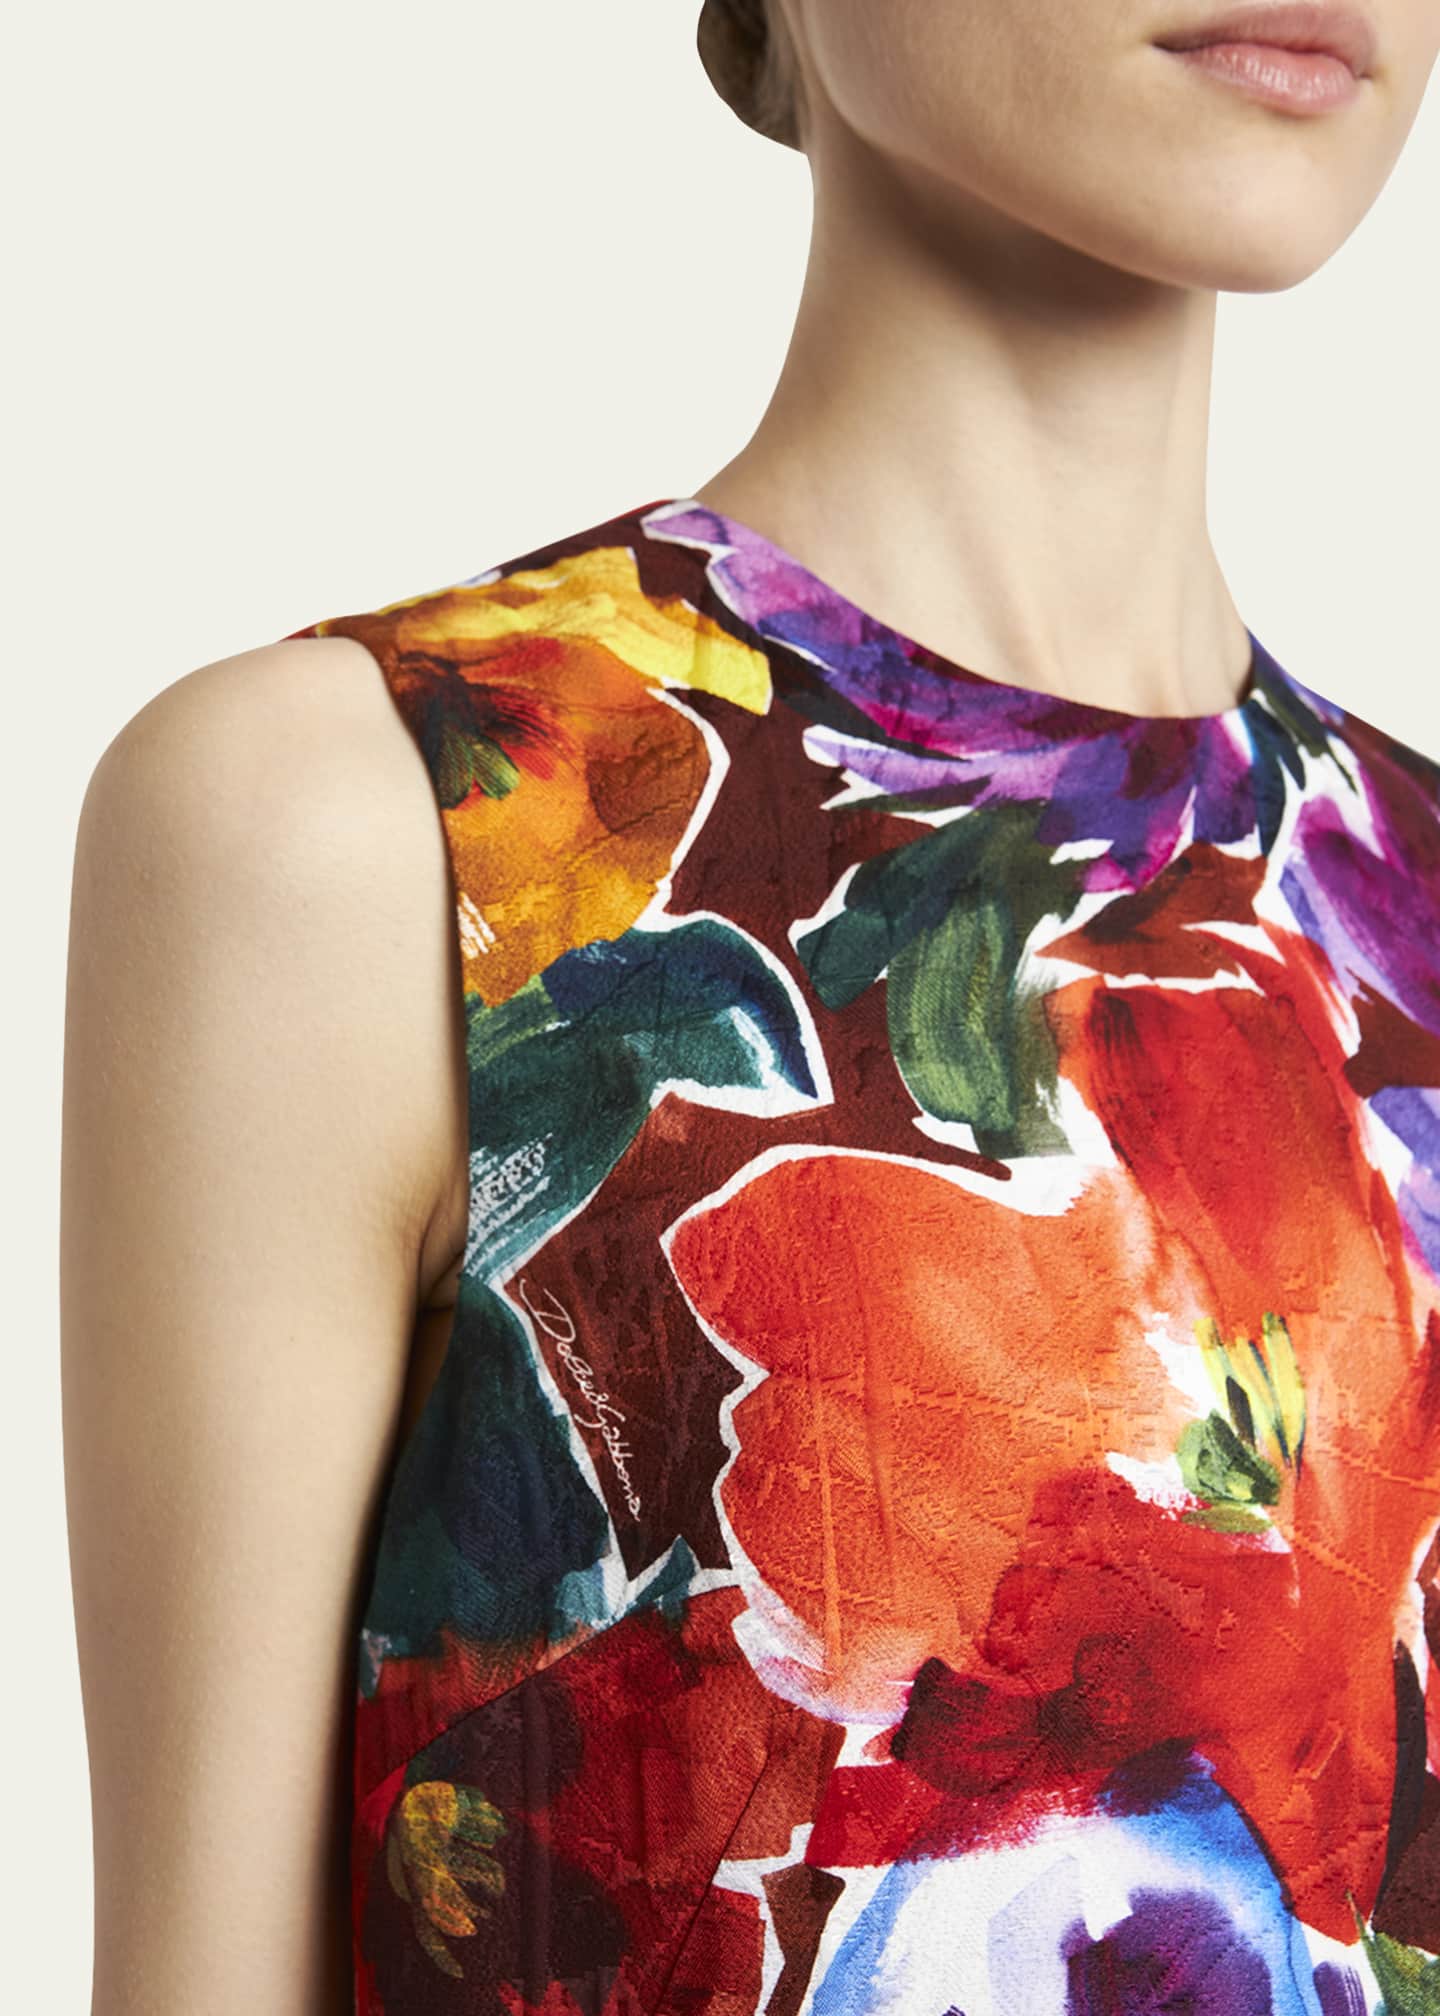 Dolce&Gabbana Abstract Floral Shift Dress - Bergdorf Goodman